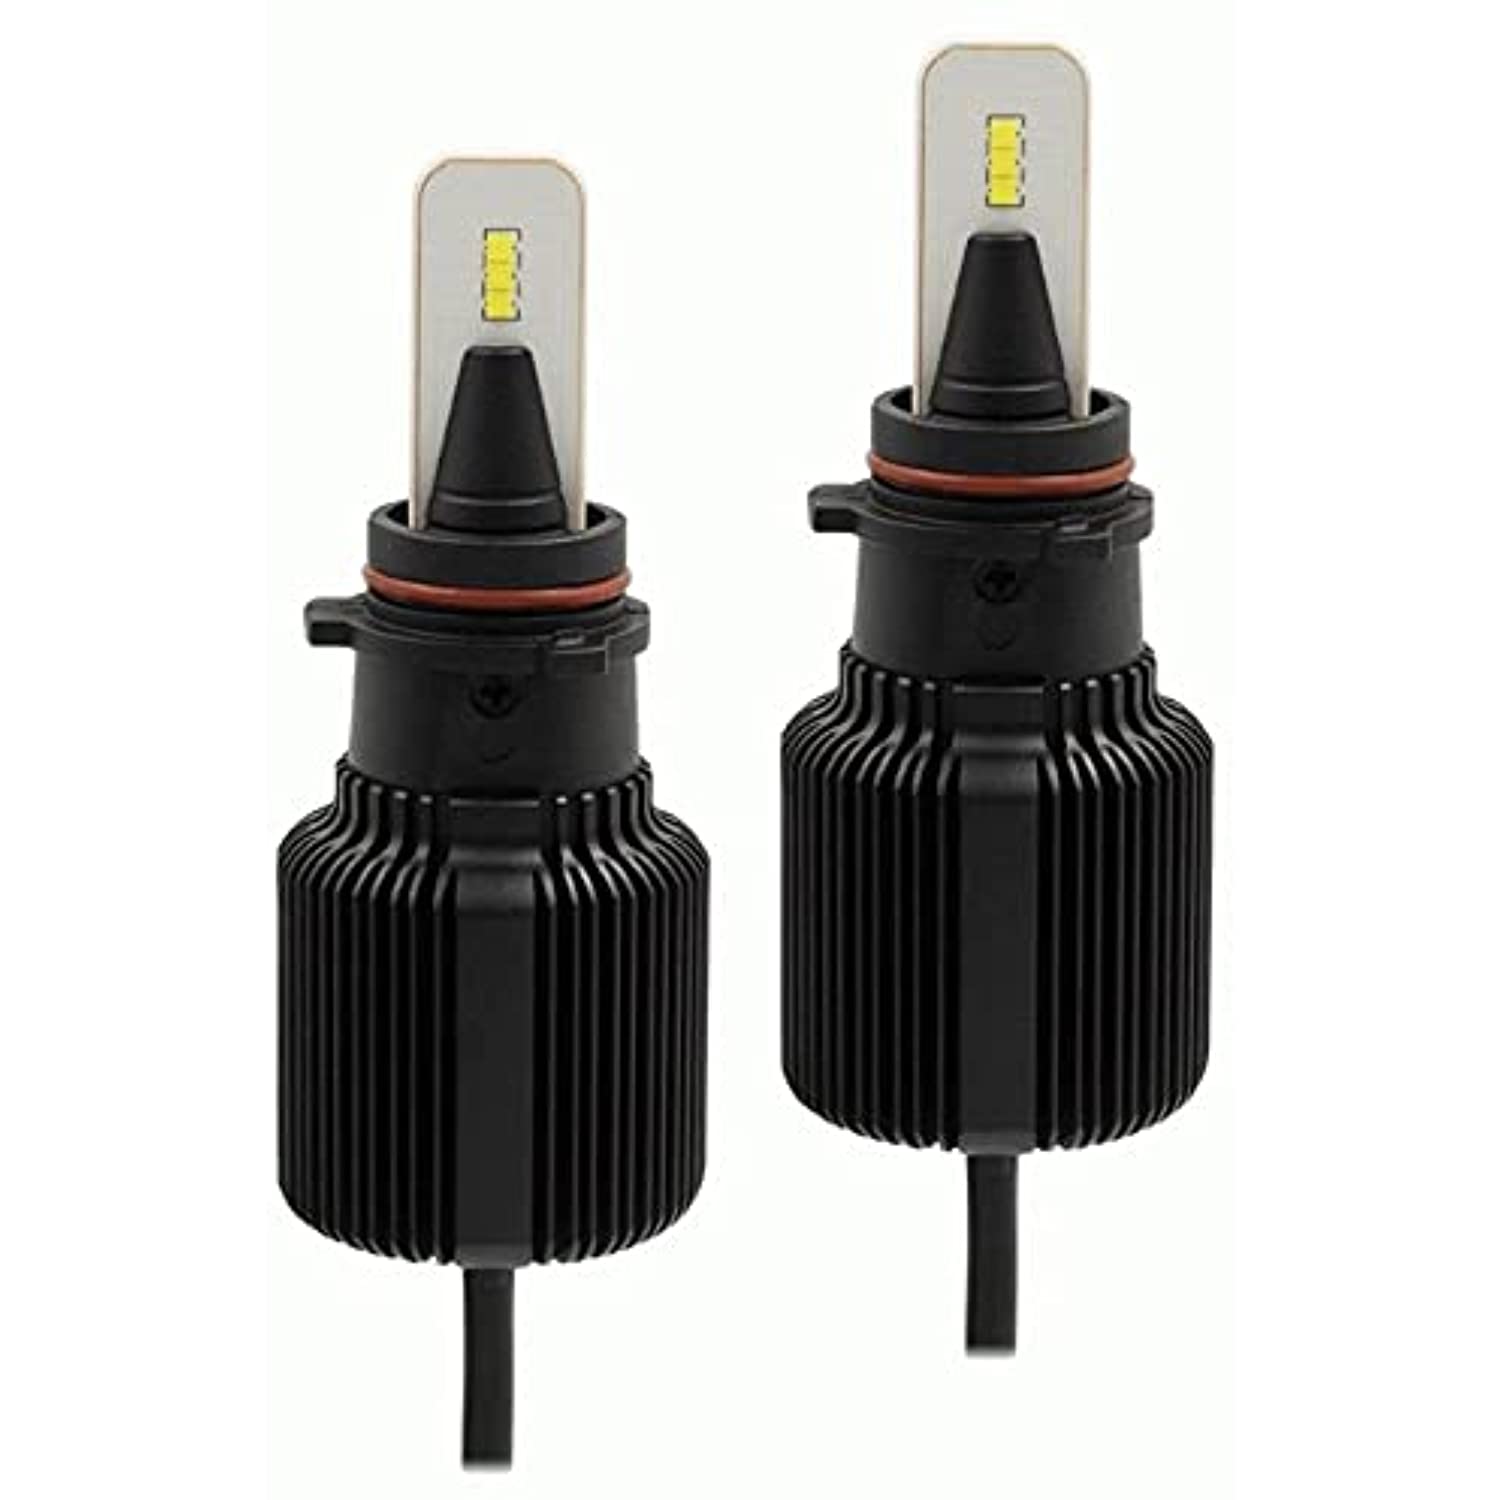 Daytona Lights - PSX26 Replacement LED bulb set (DL-PSX26)